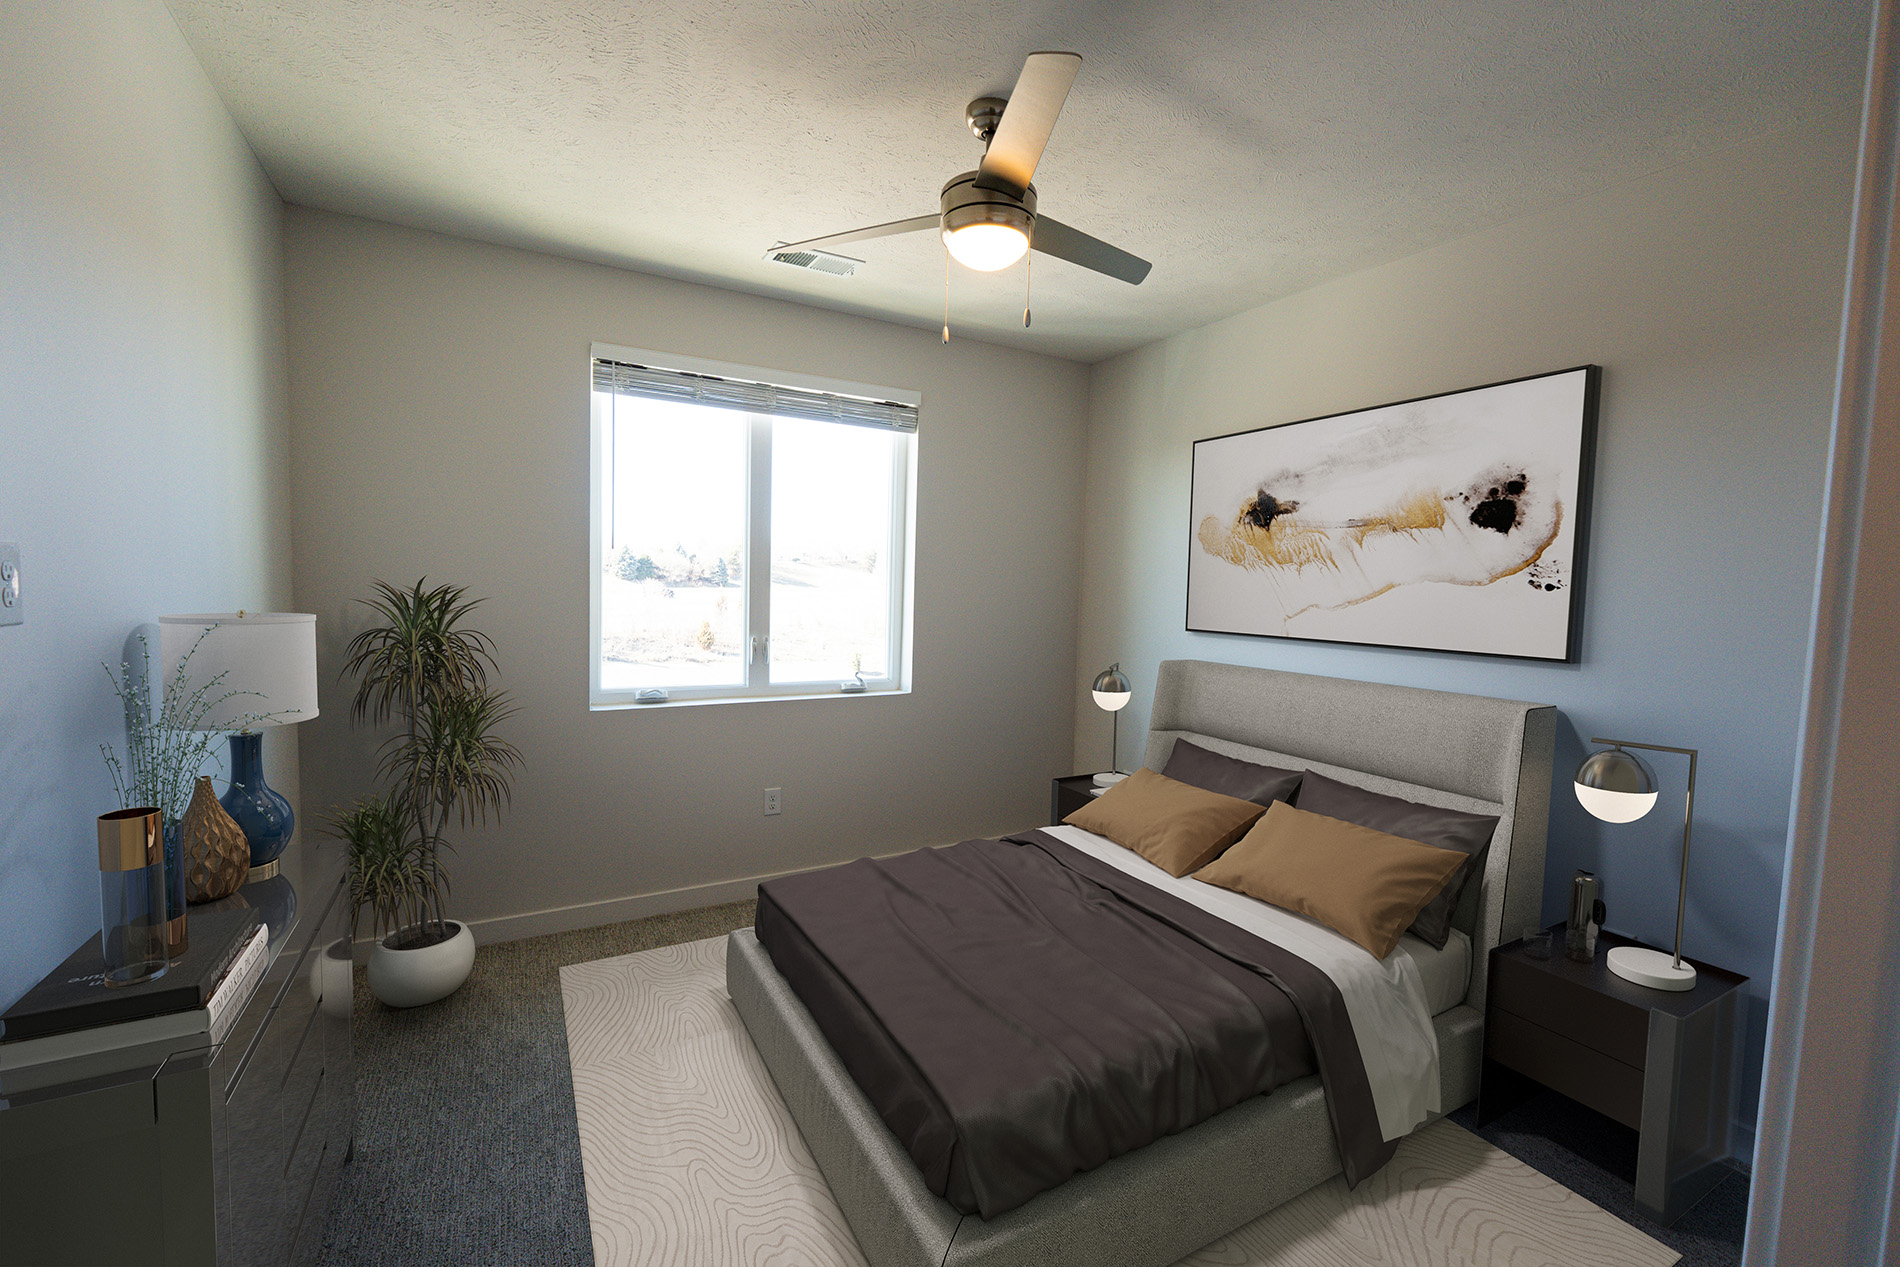 Bedroom Interior at EOS 75 Apartments in Bellevue Nebraska